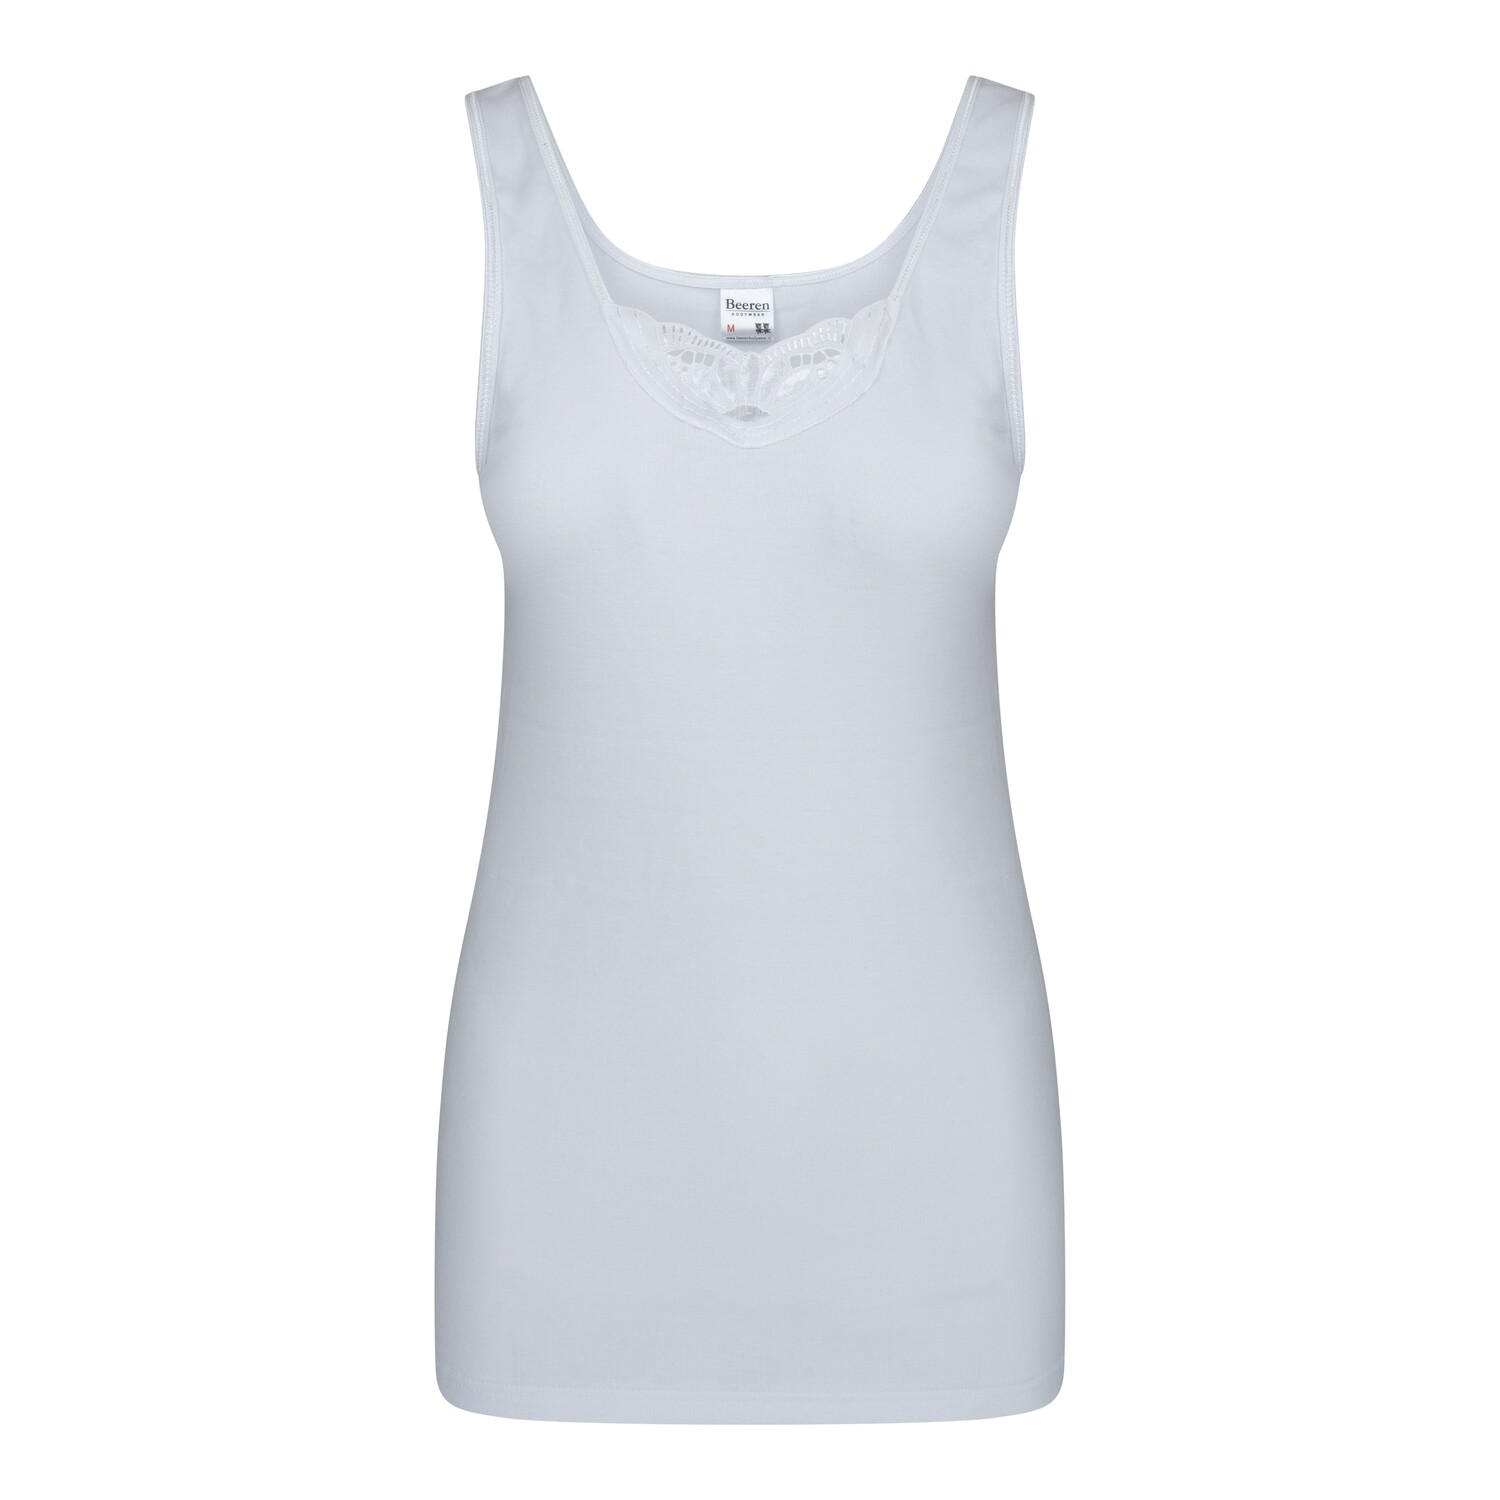 (07-490) Dames hemd Brenda wit XL